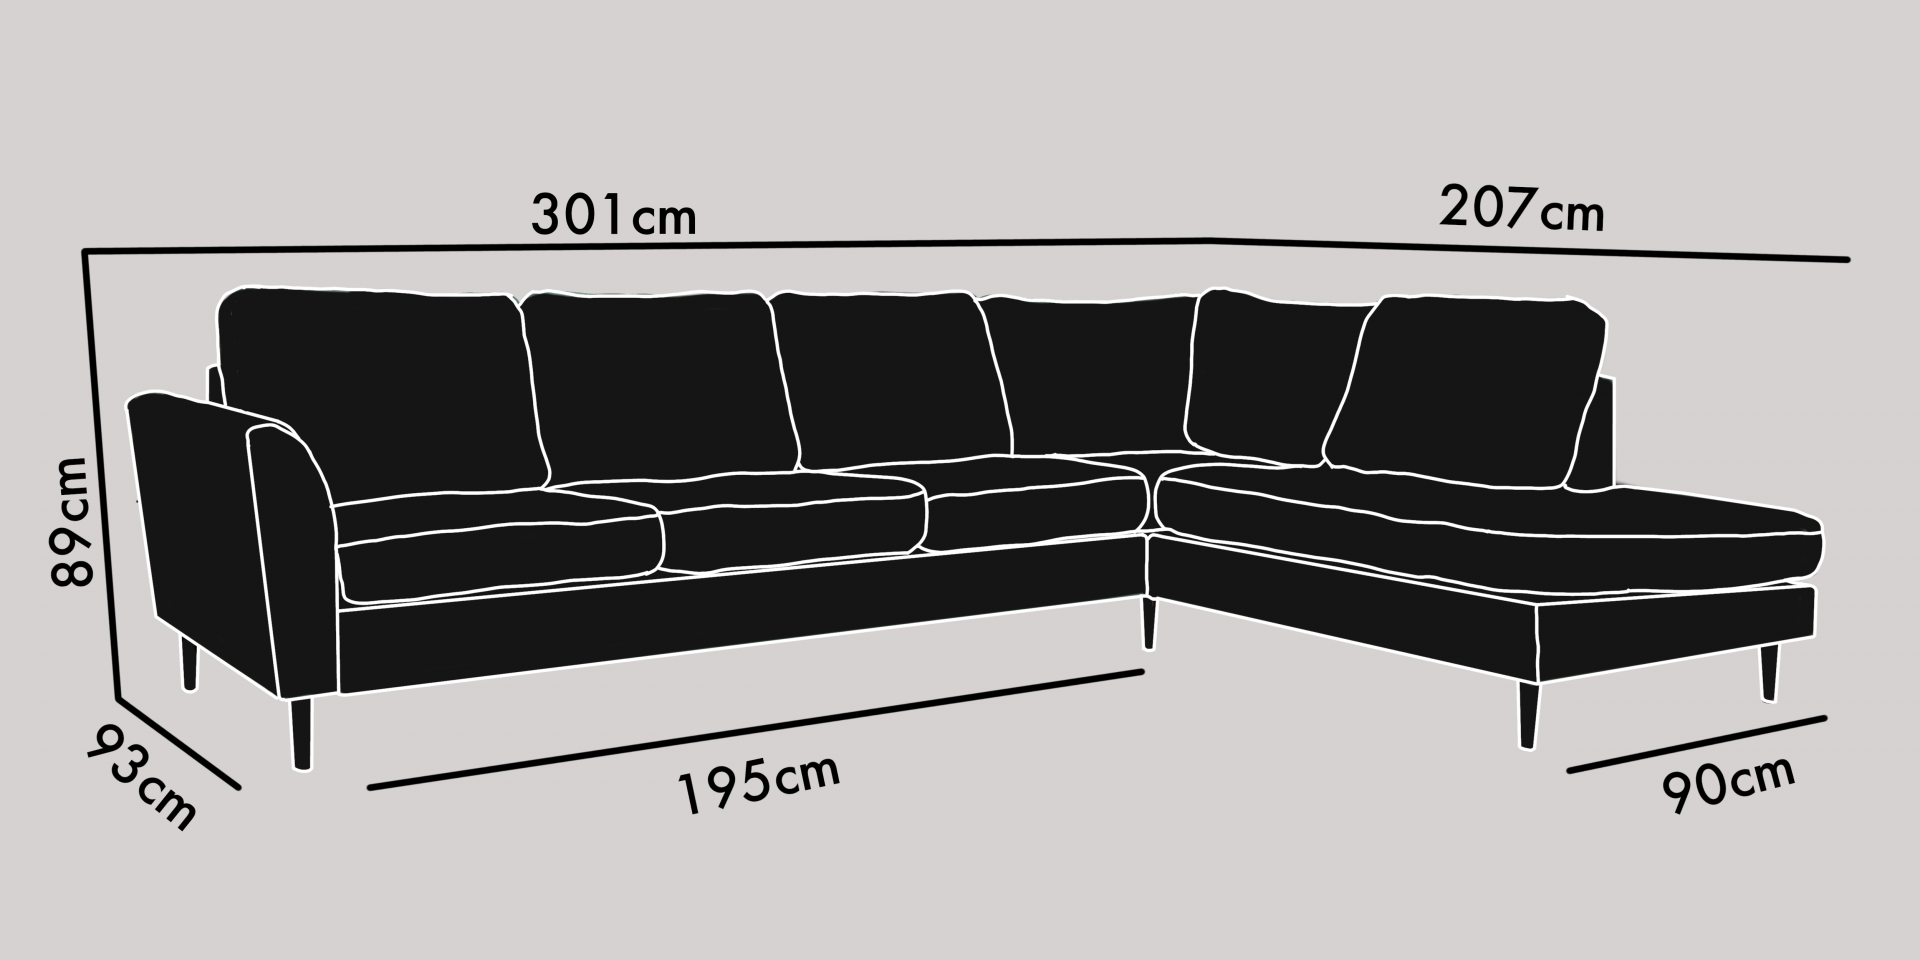 3-sits soffa large m öppet avslut höger